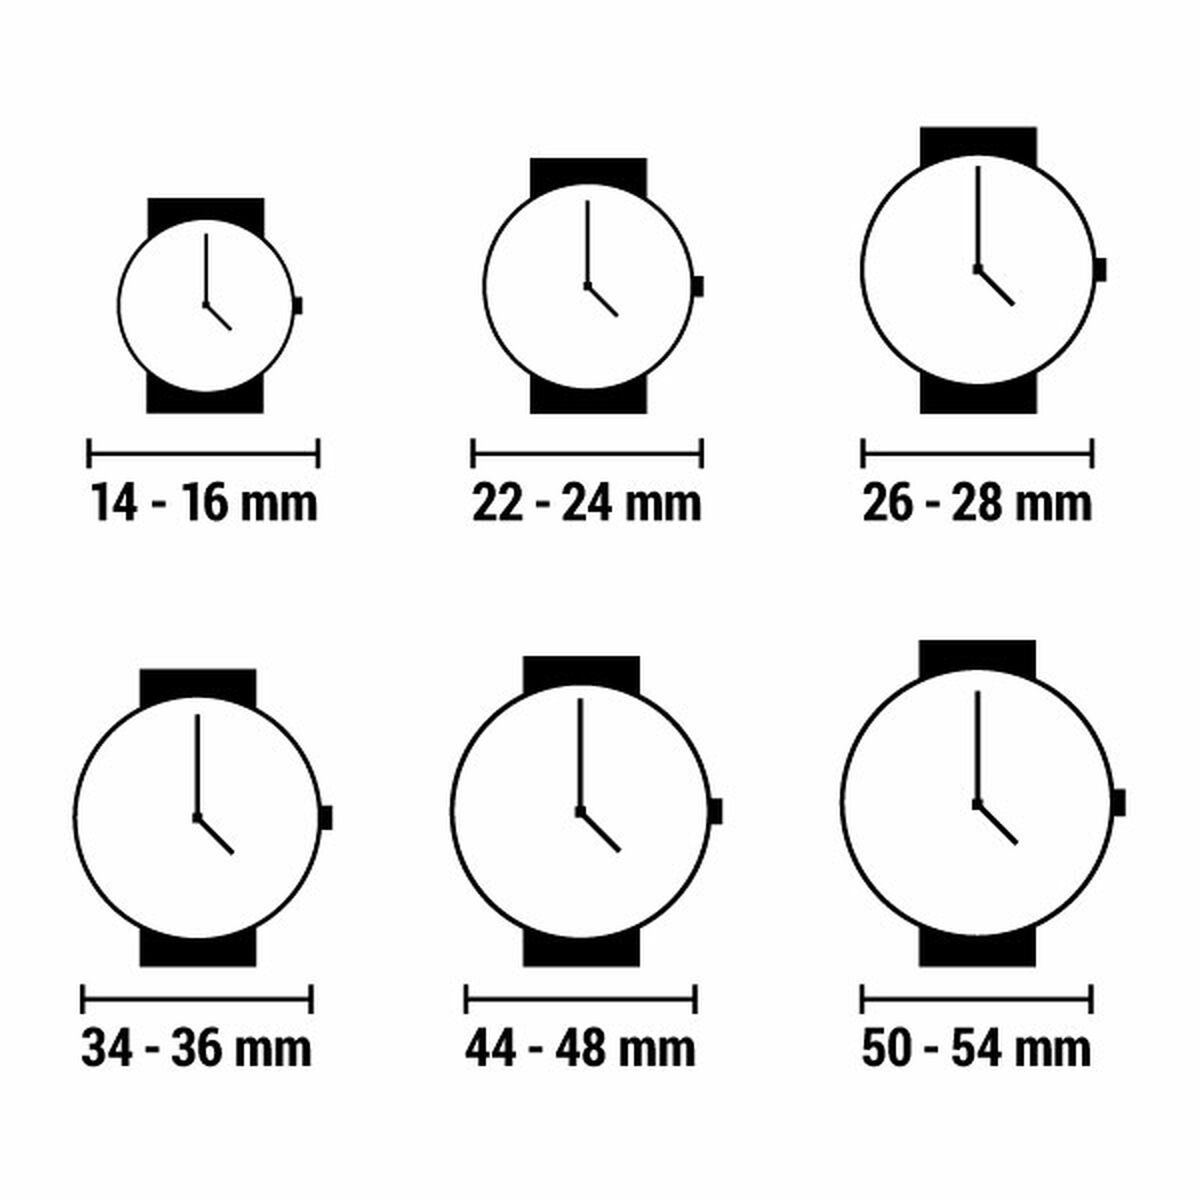 Horloge Dames CO88 Collection 8CW-10002